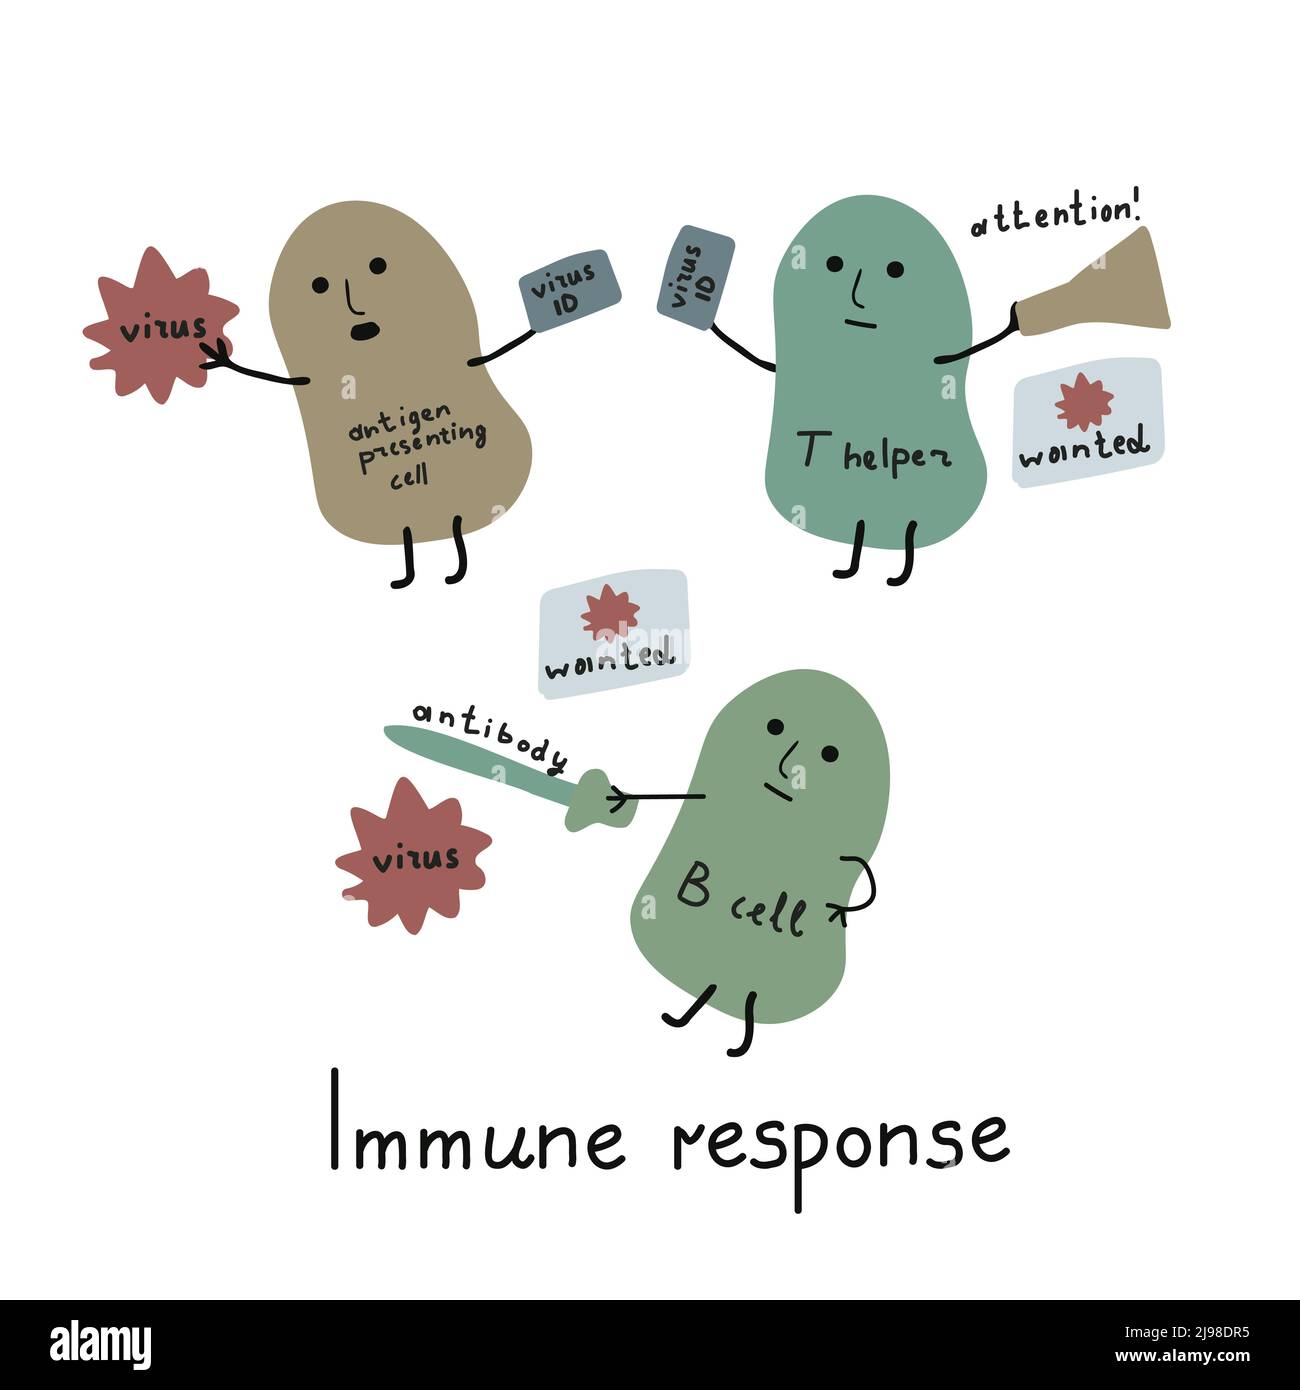 Immune response illustration cartoon style Stock Vector Image & Art - Alamy